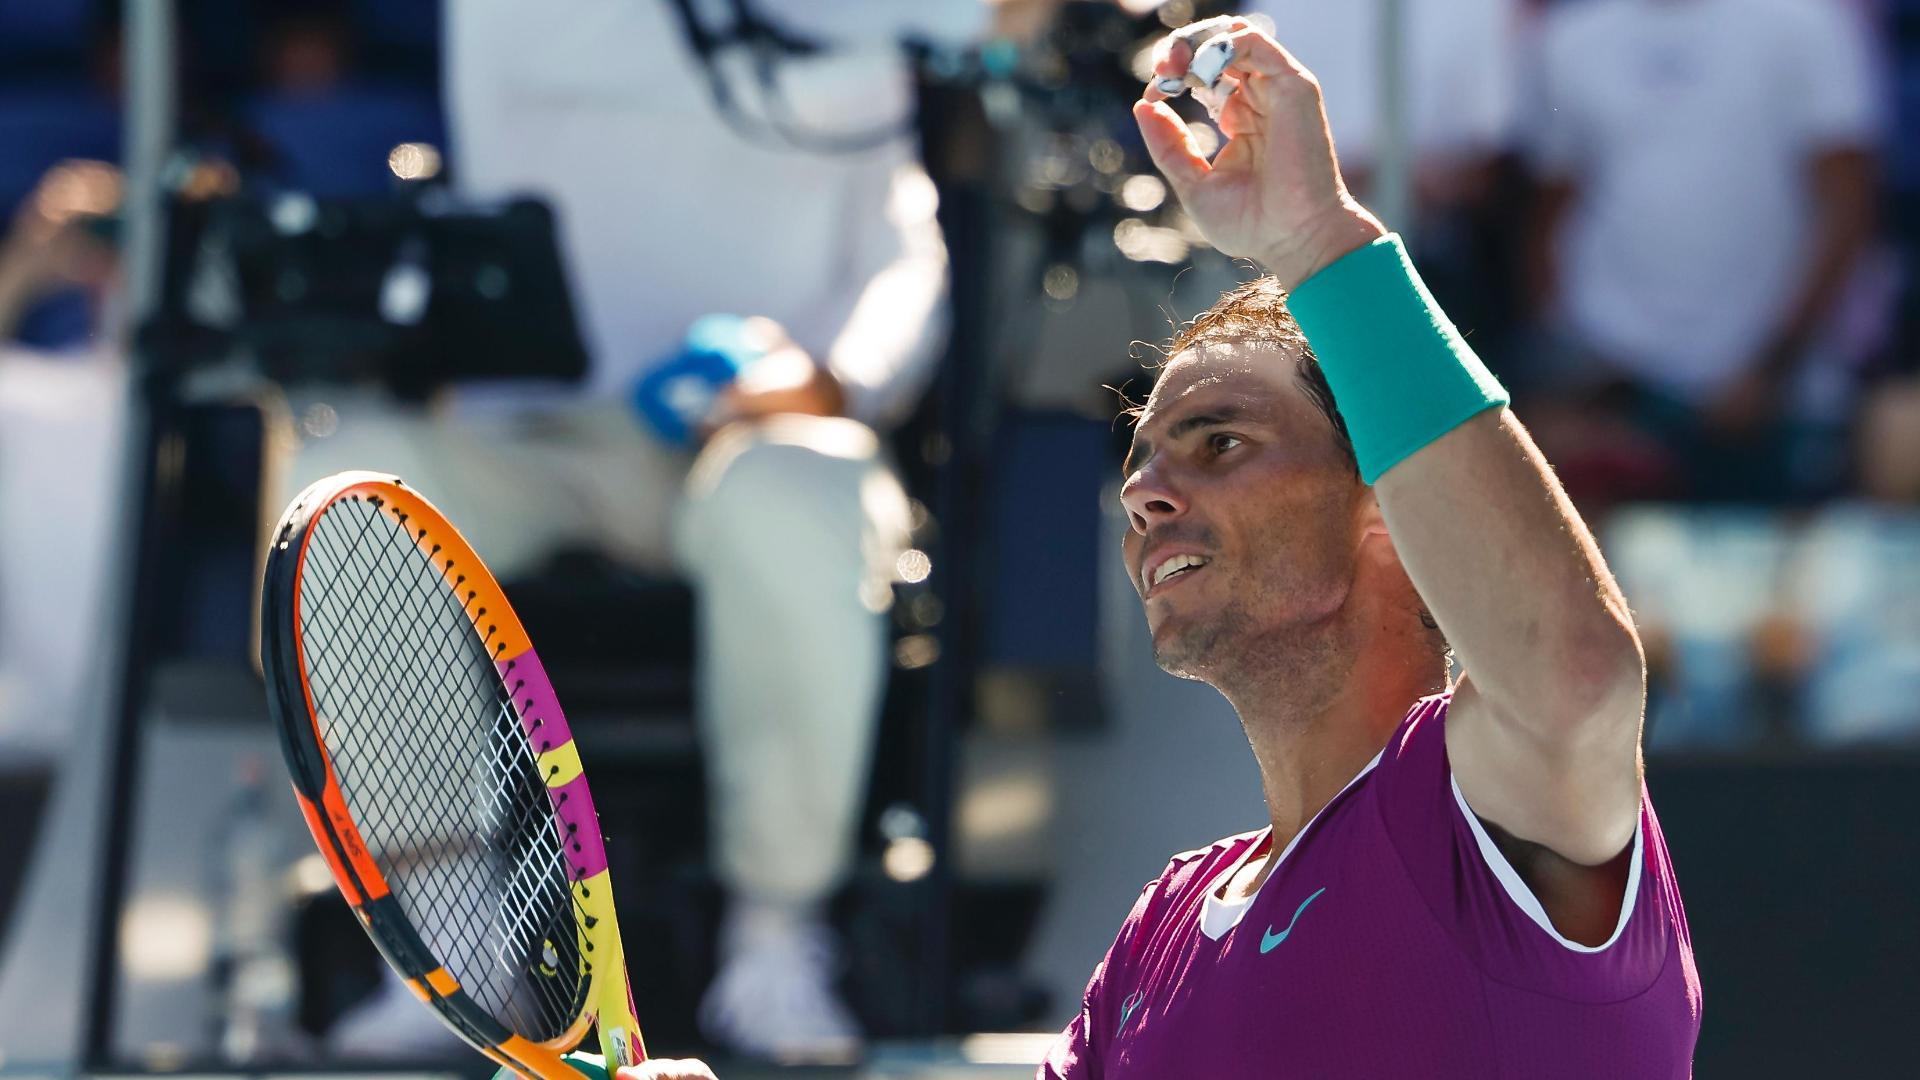 Nadal keeps momentum going, advances to third round at Aussie Open